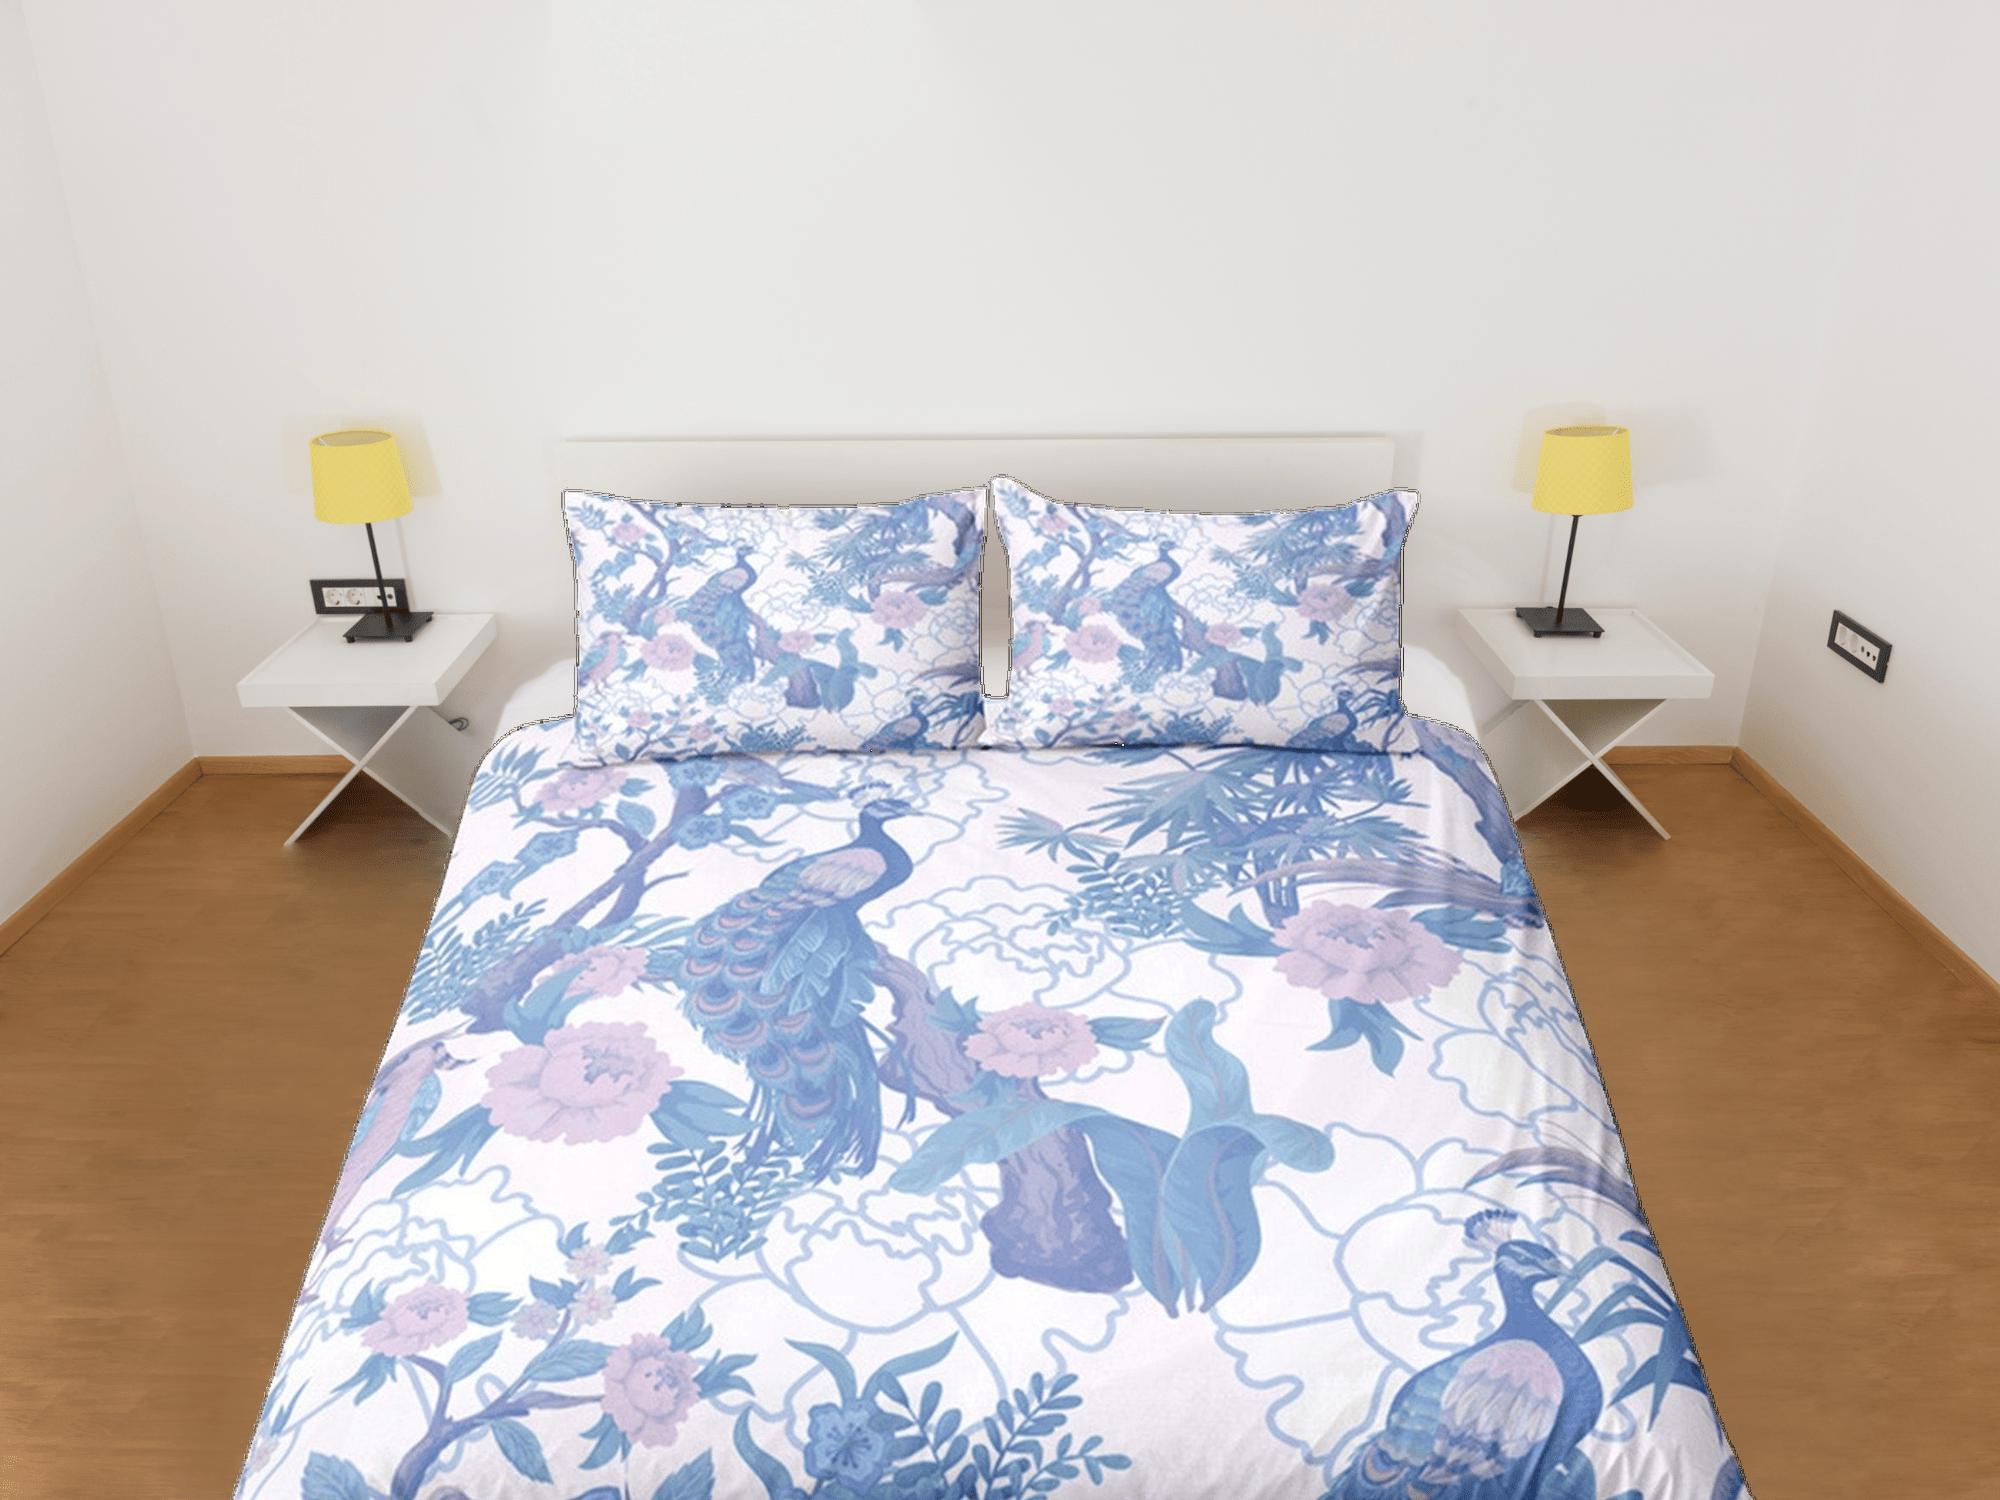 daintyduvet Peacock White Duvet Cover Set Floral Bedspread, Dorm Bedding with Pillowcase, , Single Bedding Double